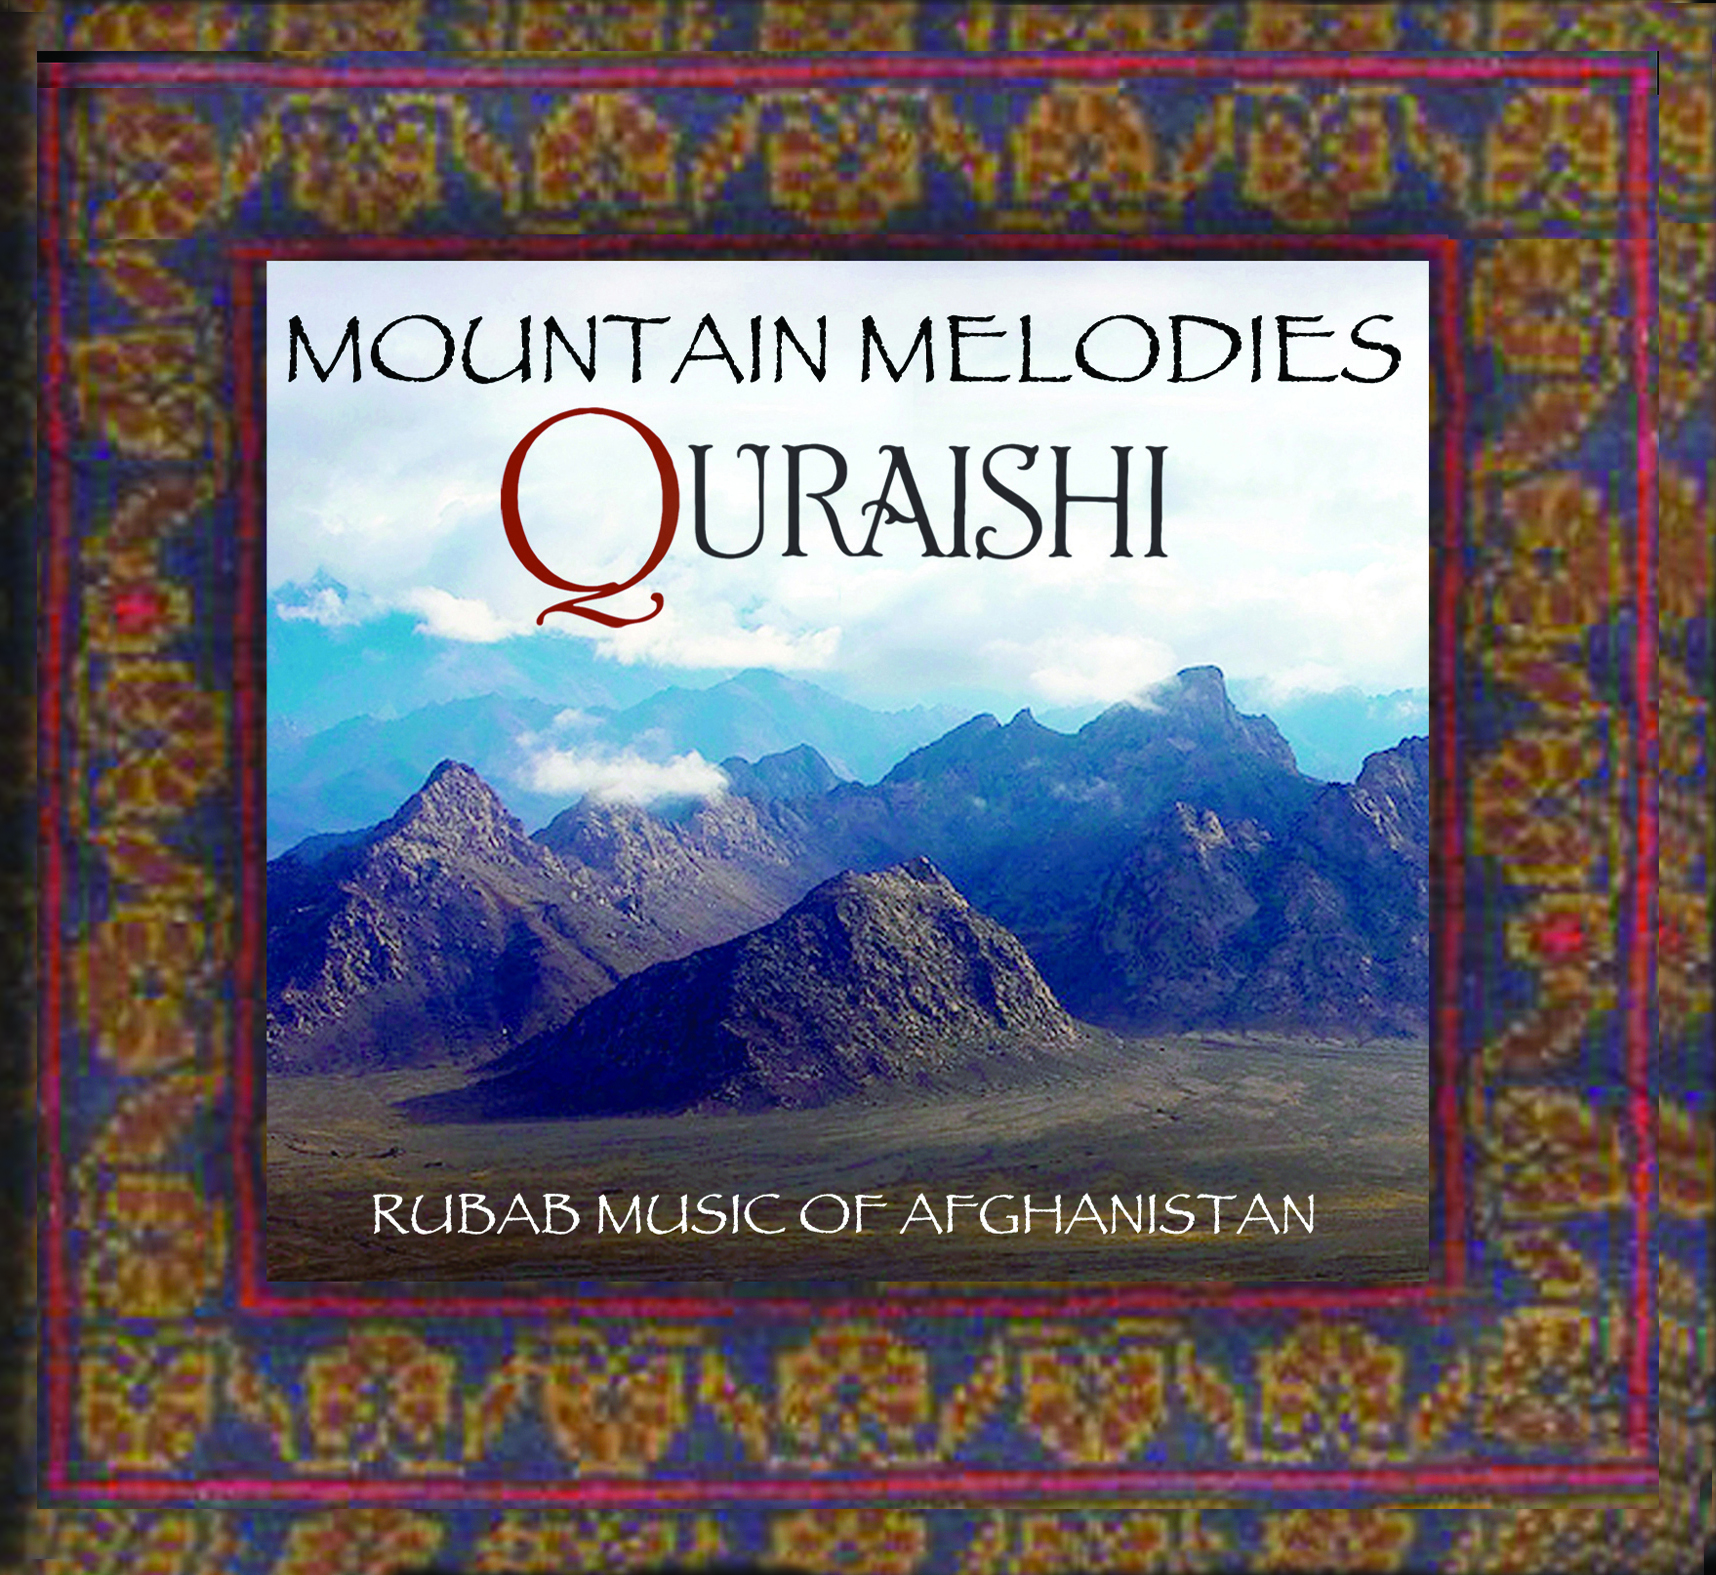 Cover of Quraishi's album  "Mountain Melodies" (photo: Evergreene Music)